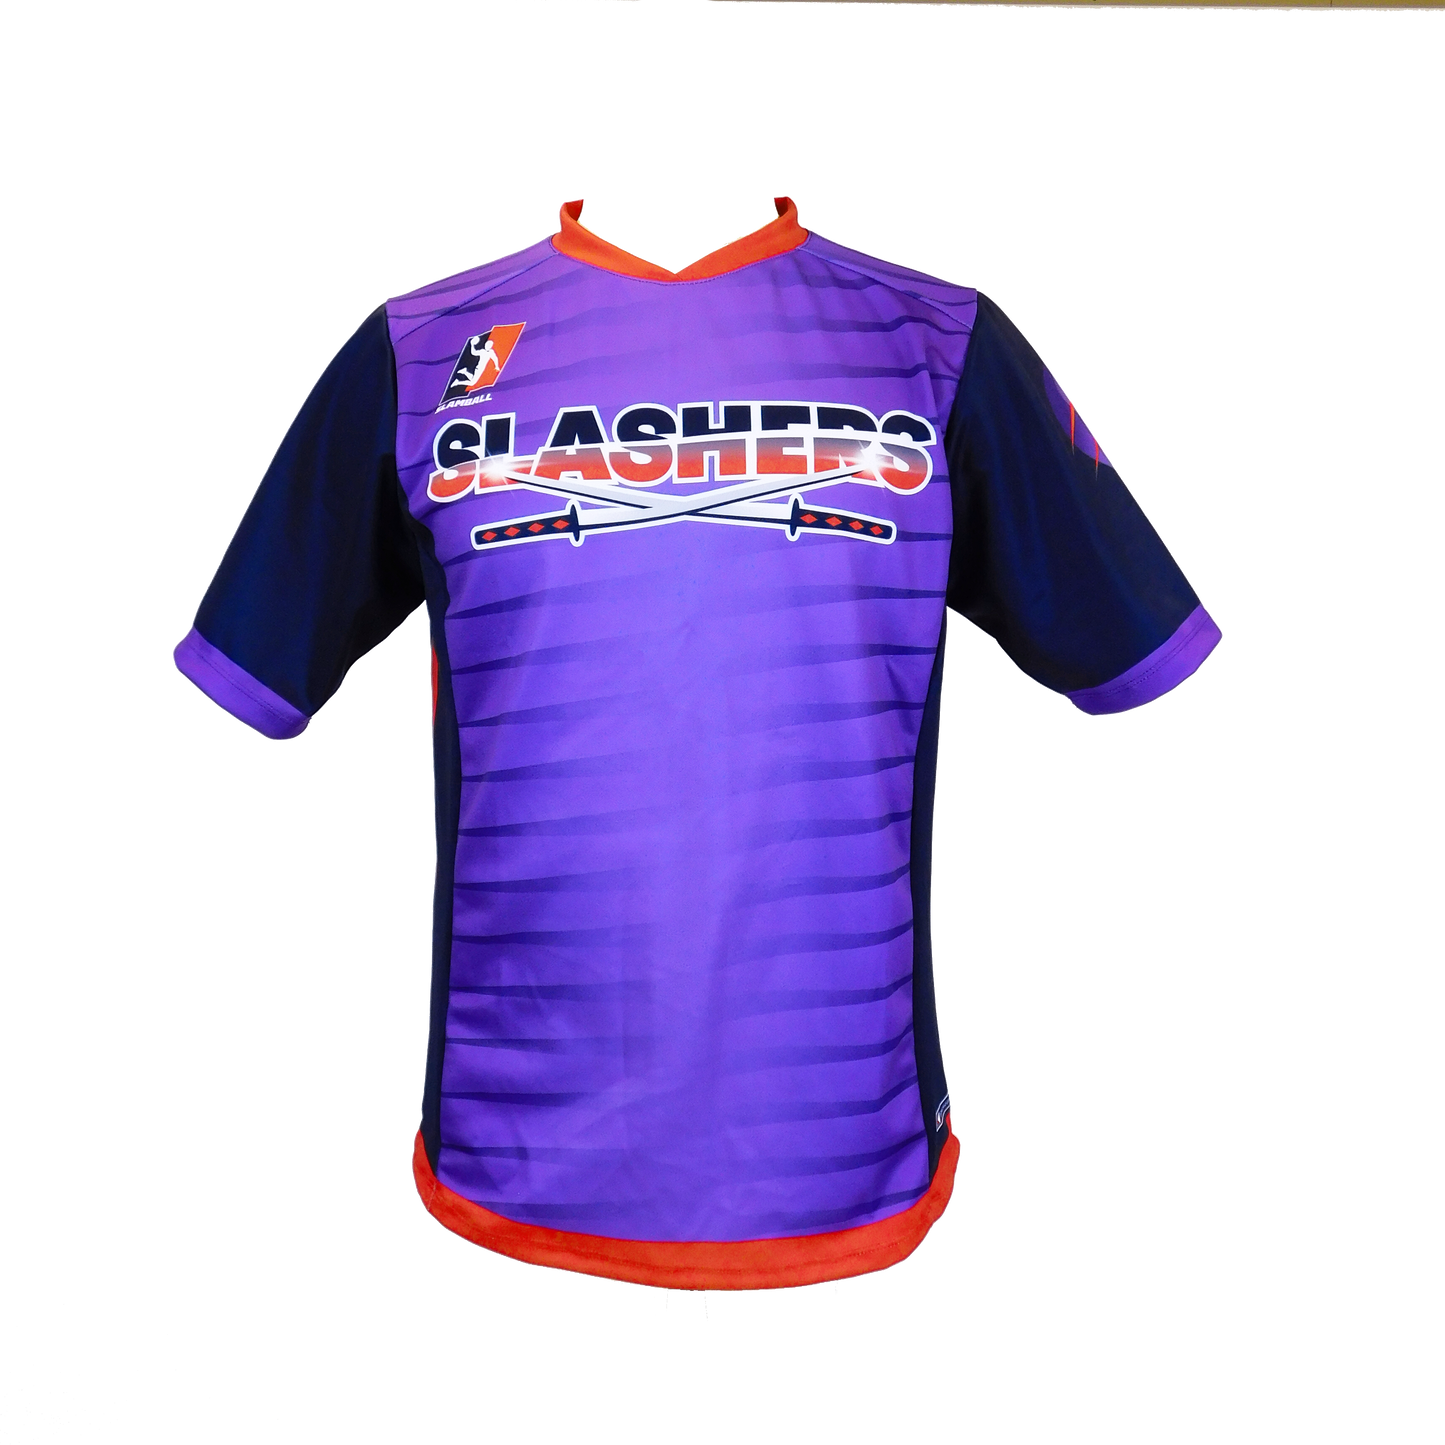 SLASHERS - Team Jersey - Purple/Black